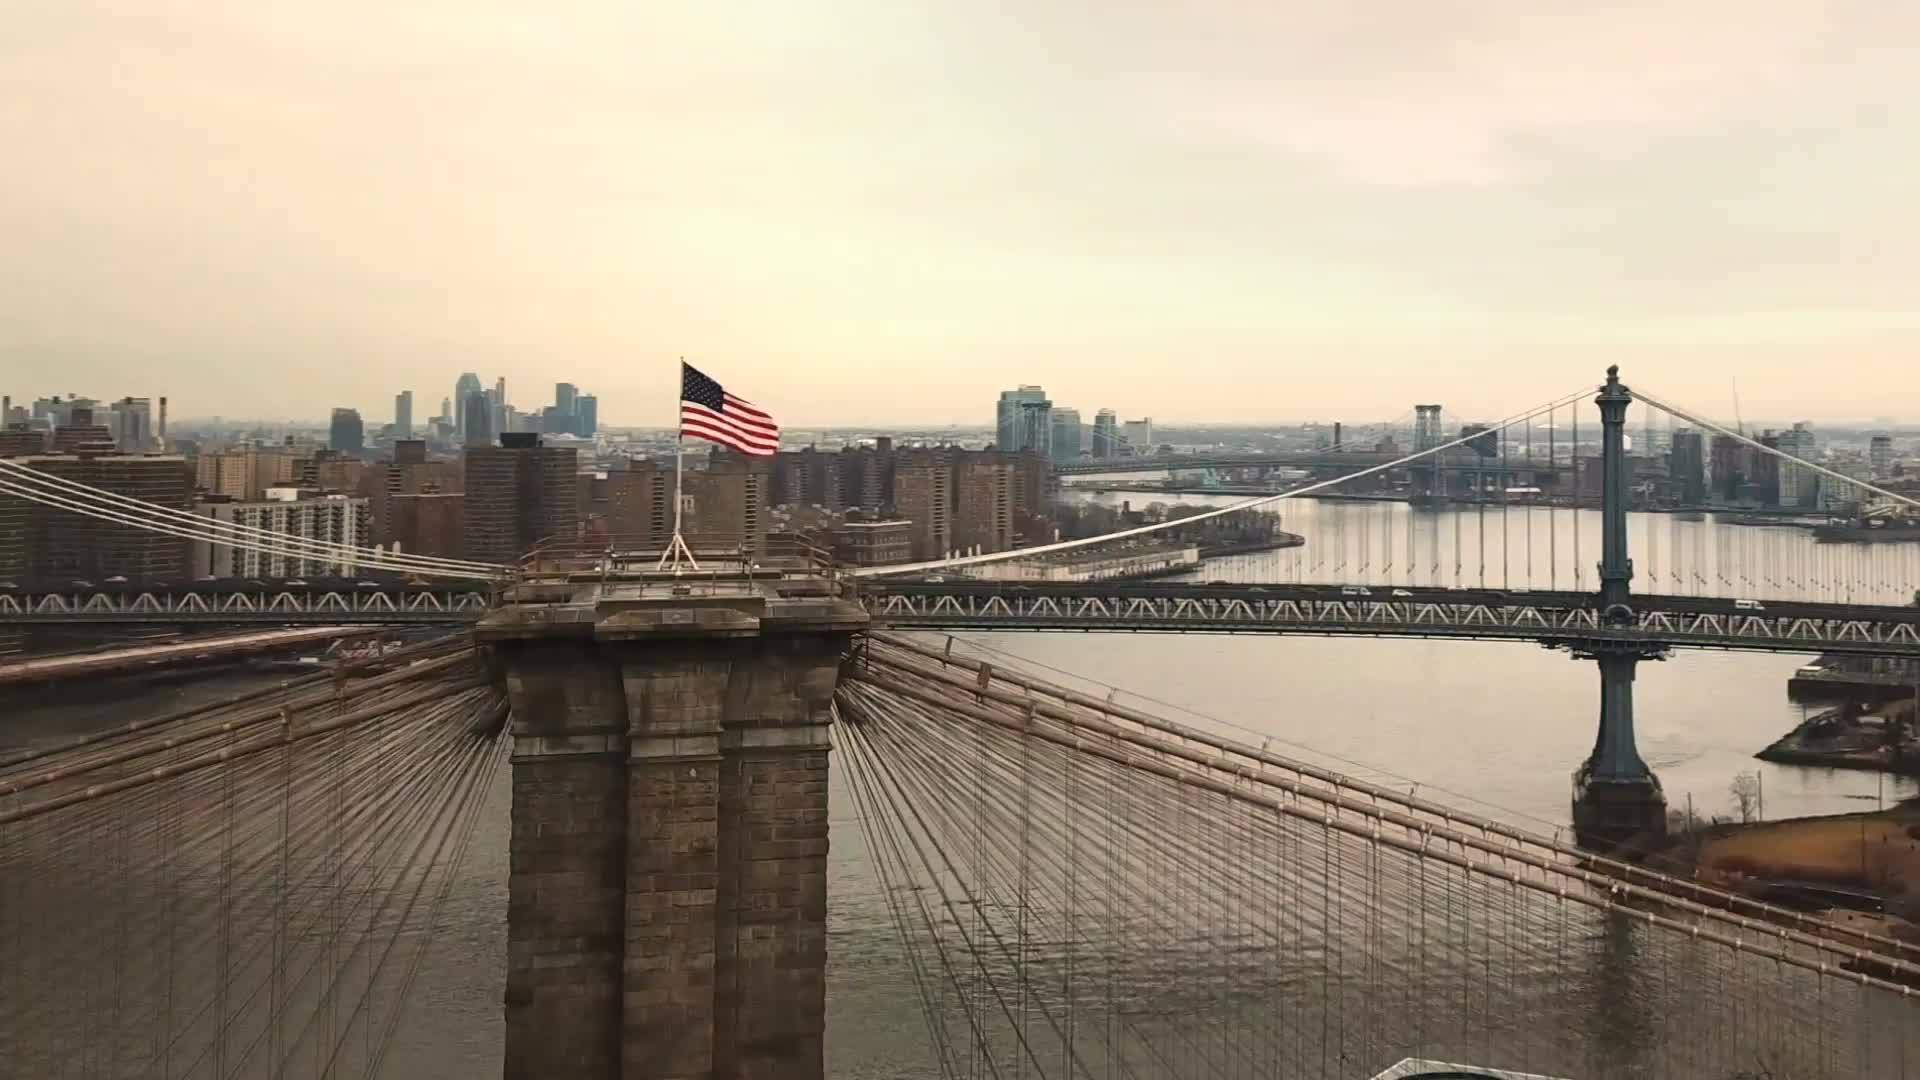 Brooklyn Bridge with American flag aerial circling toward Manhattan skyline with Freedom Tower in 1080 HD